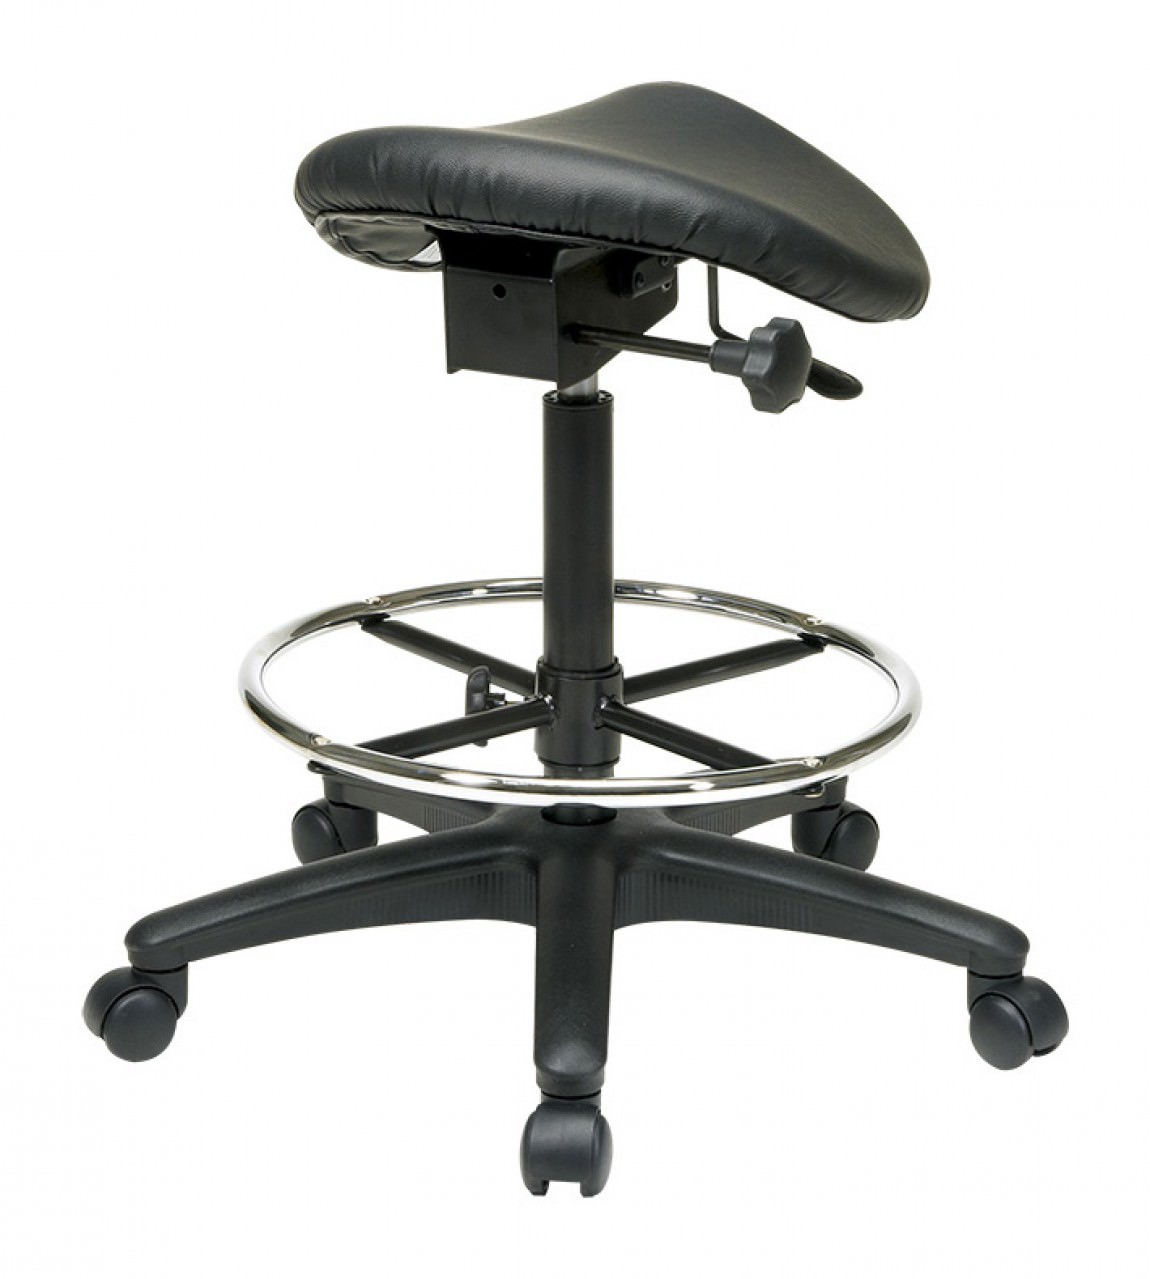 https://madisonliquidators.com/images/p/1150/24842-saddle-stool-chair-3.jpg